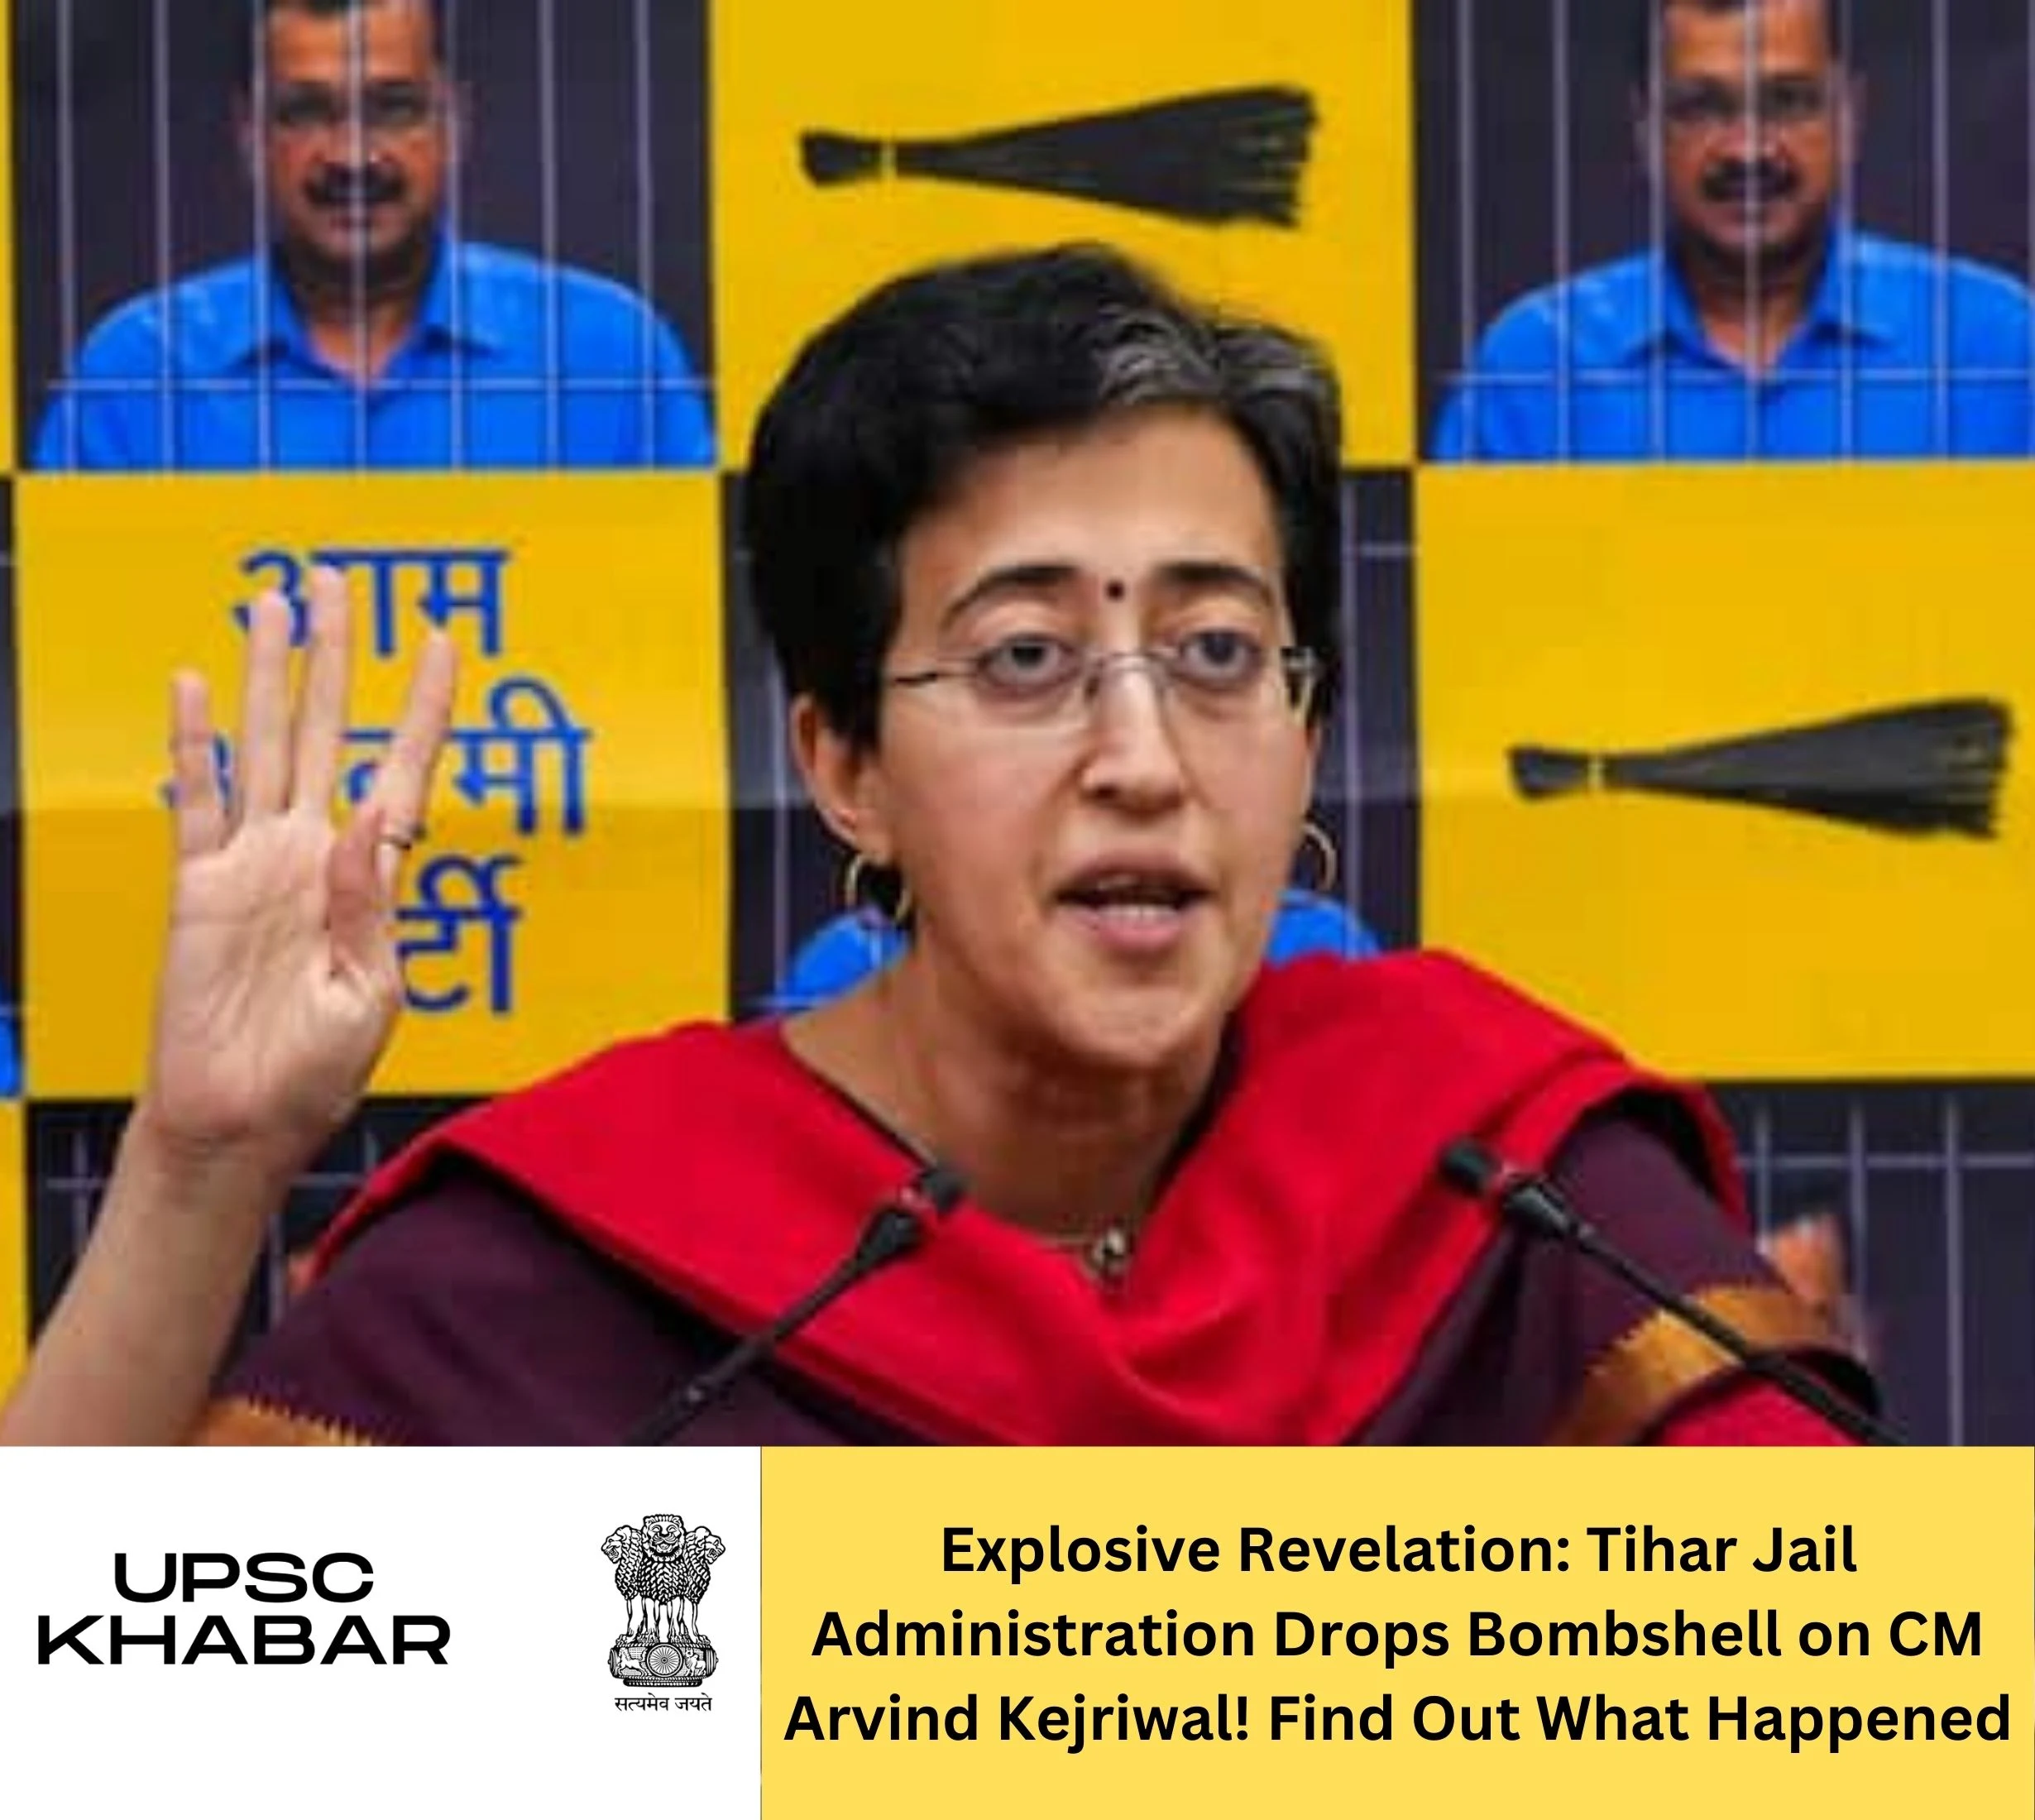 Explosive Revelation: Tihar Jail Administration Drops Bombshell on CM Arvind Kejriwal! Find Out What Happened